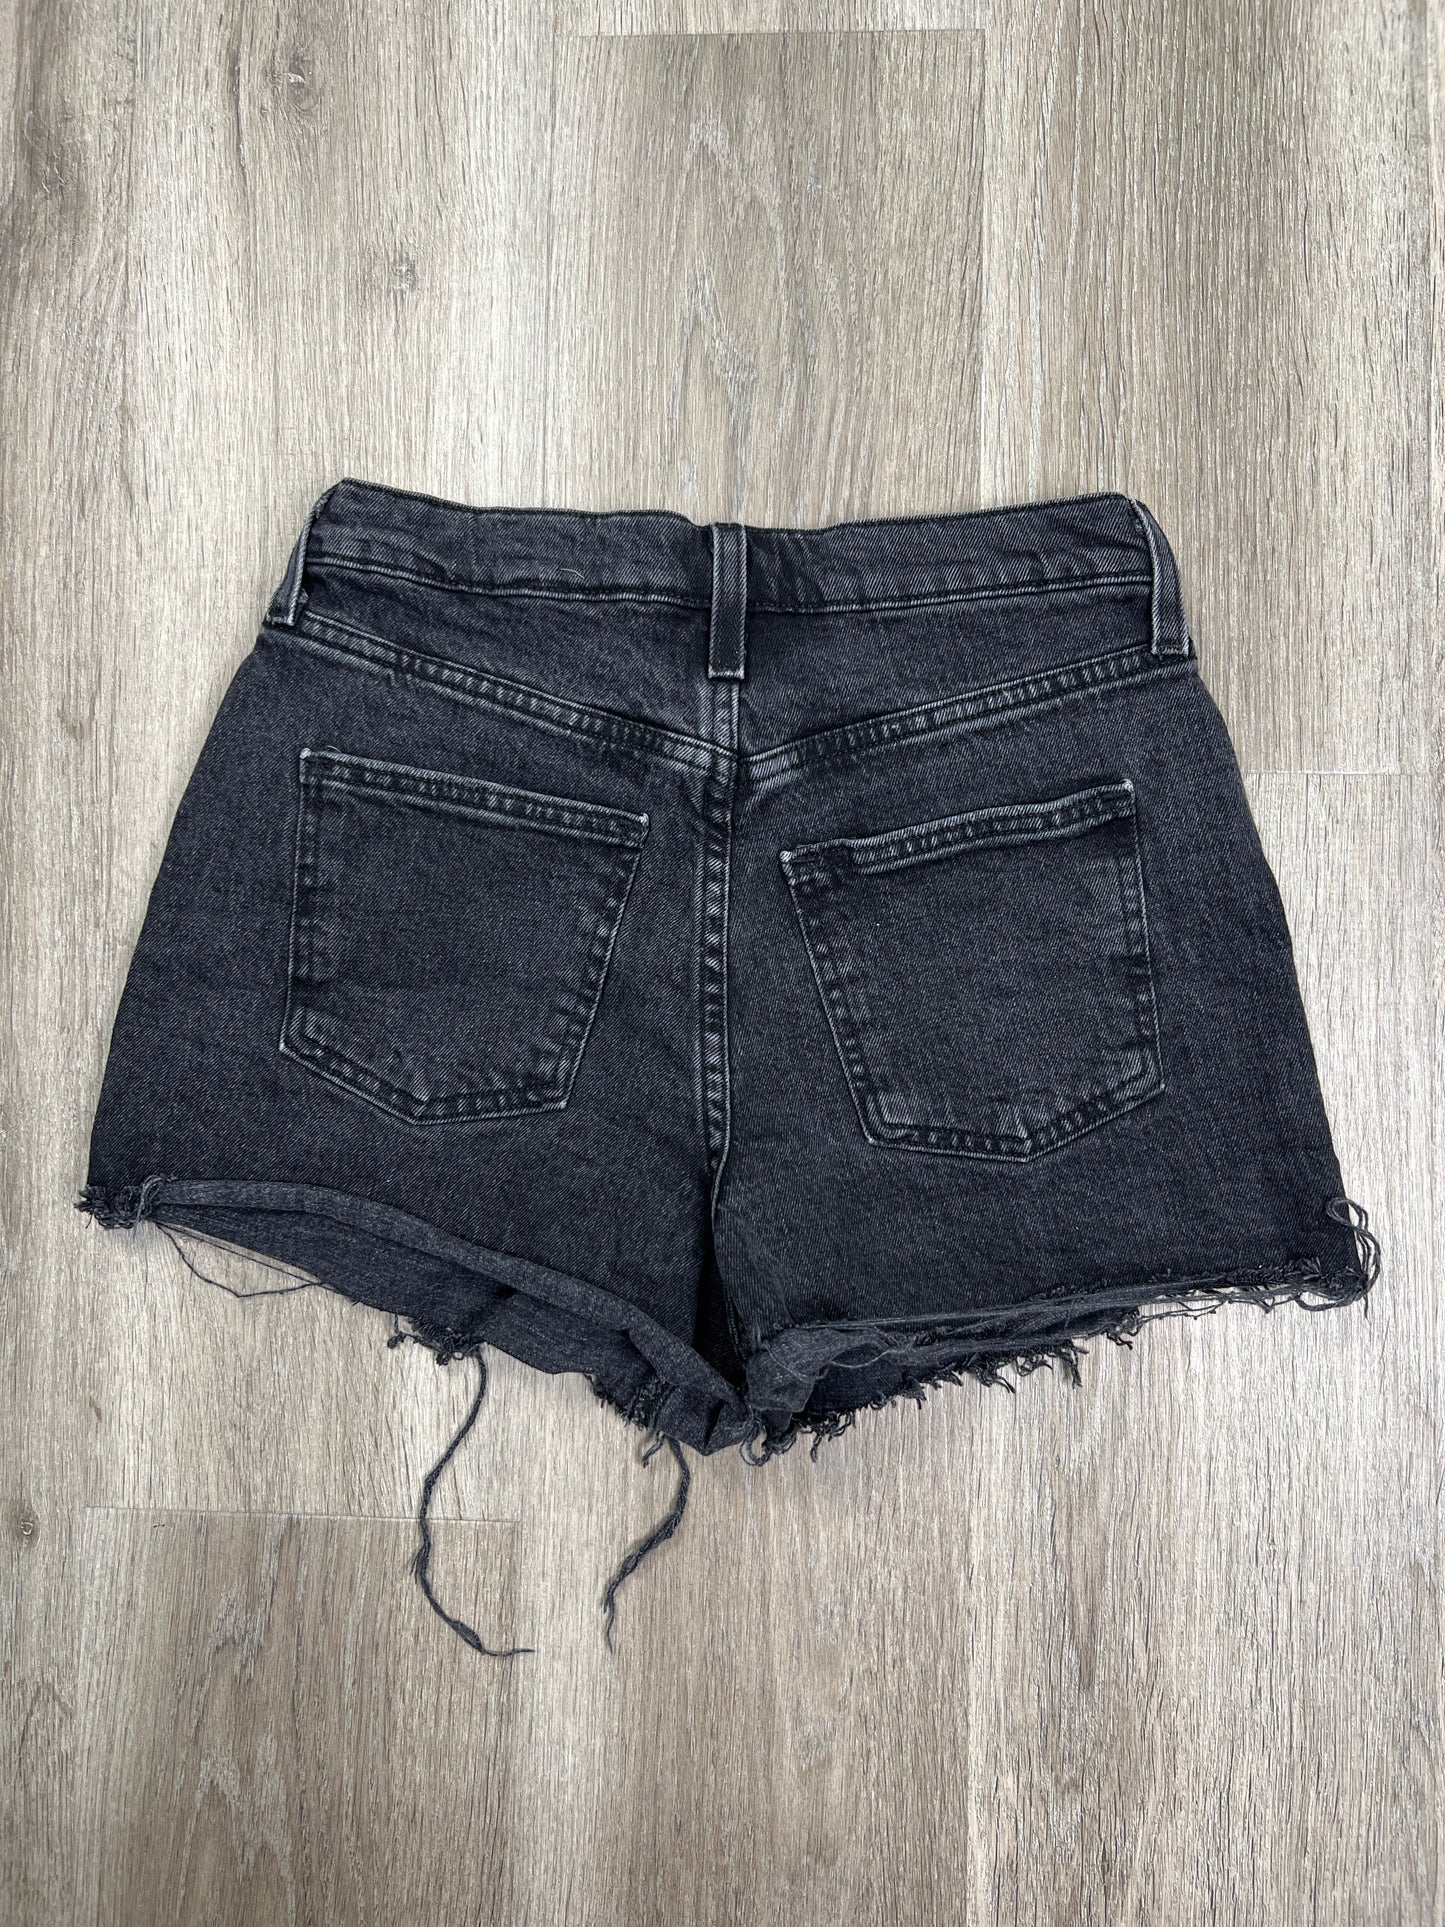 Black Denim Shorts Universal Thread, Size S